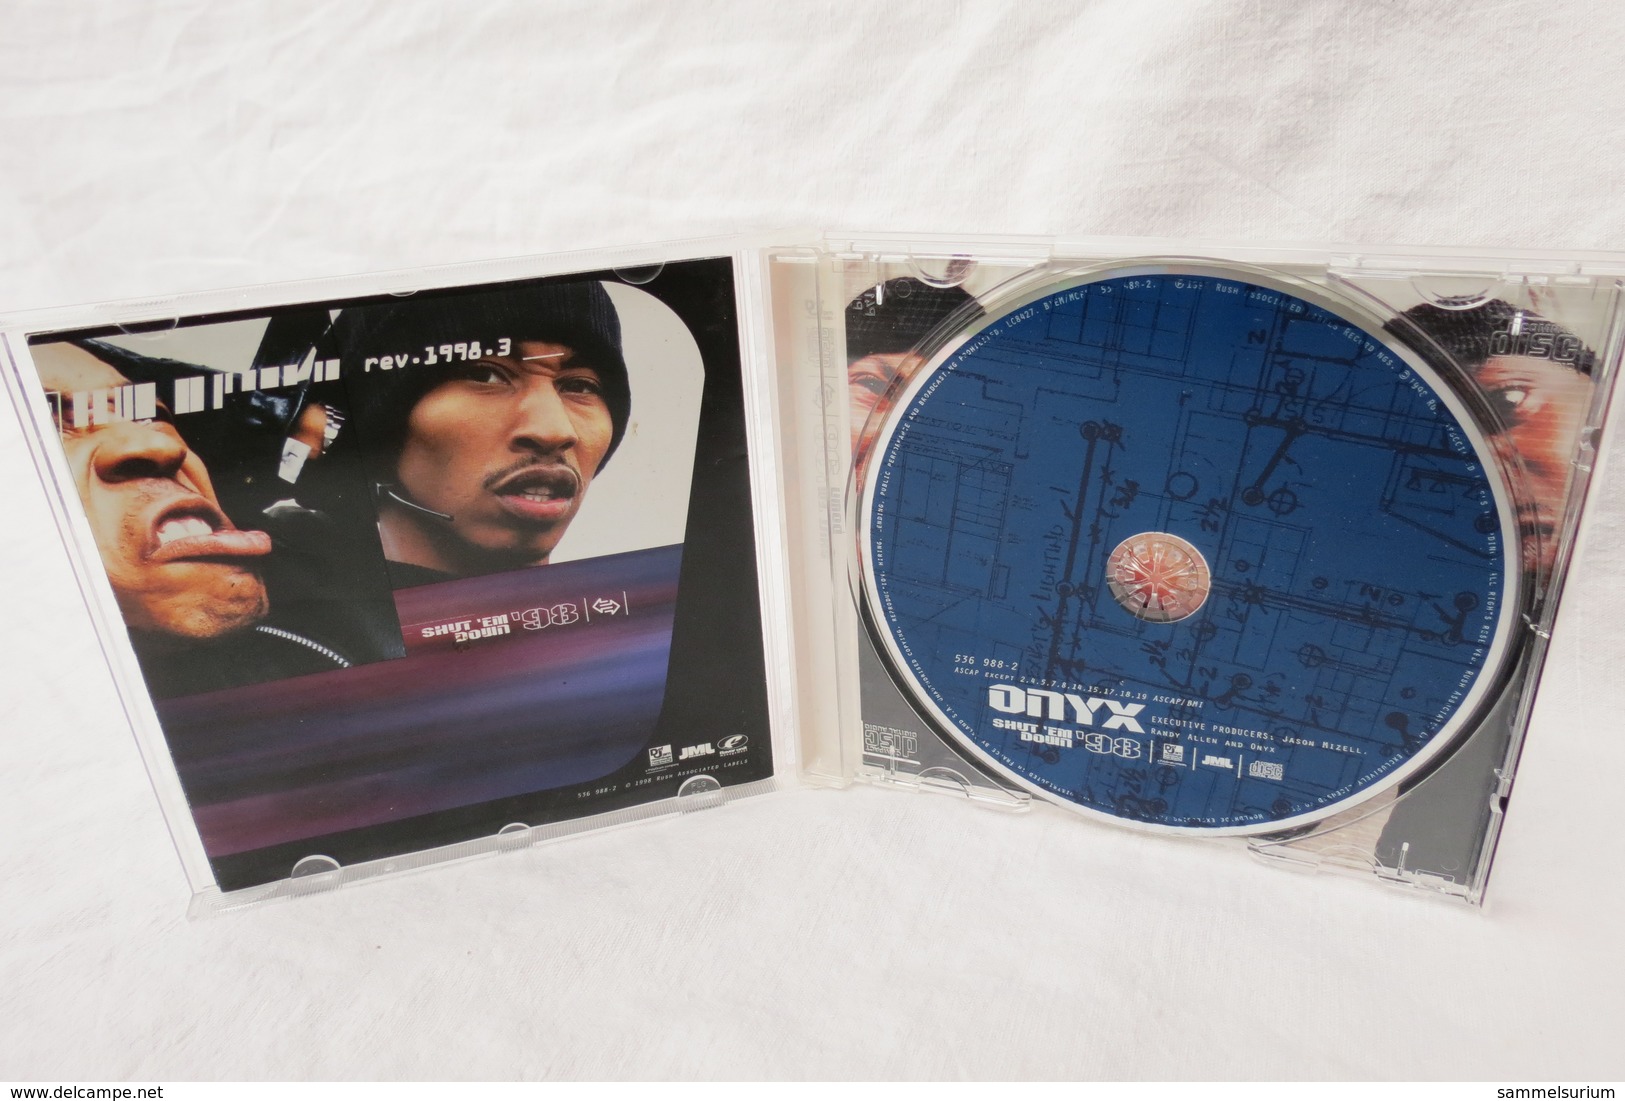 CD "Onyx" Shut 'em Down - Rap & Hip Hop